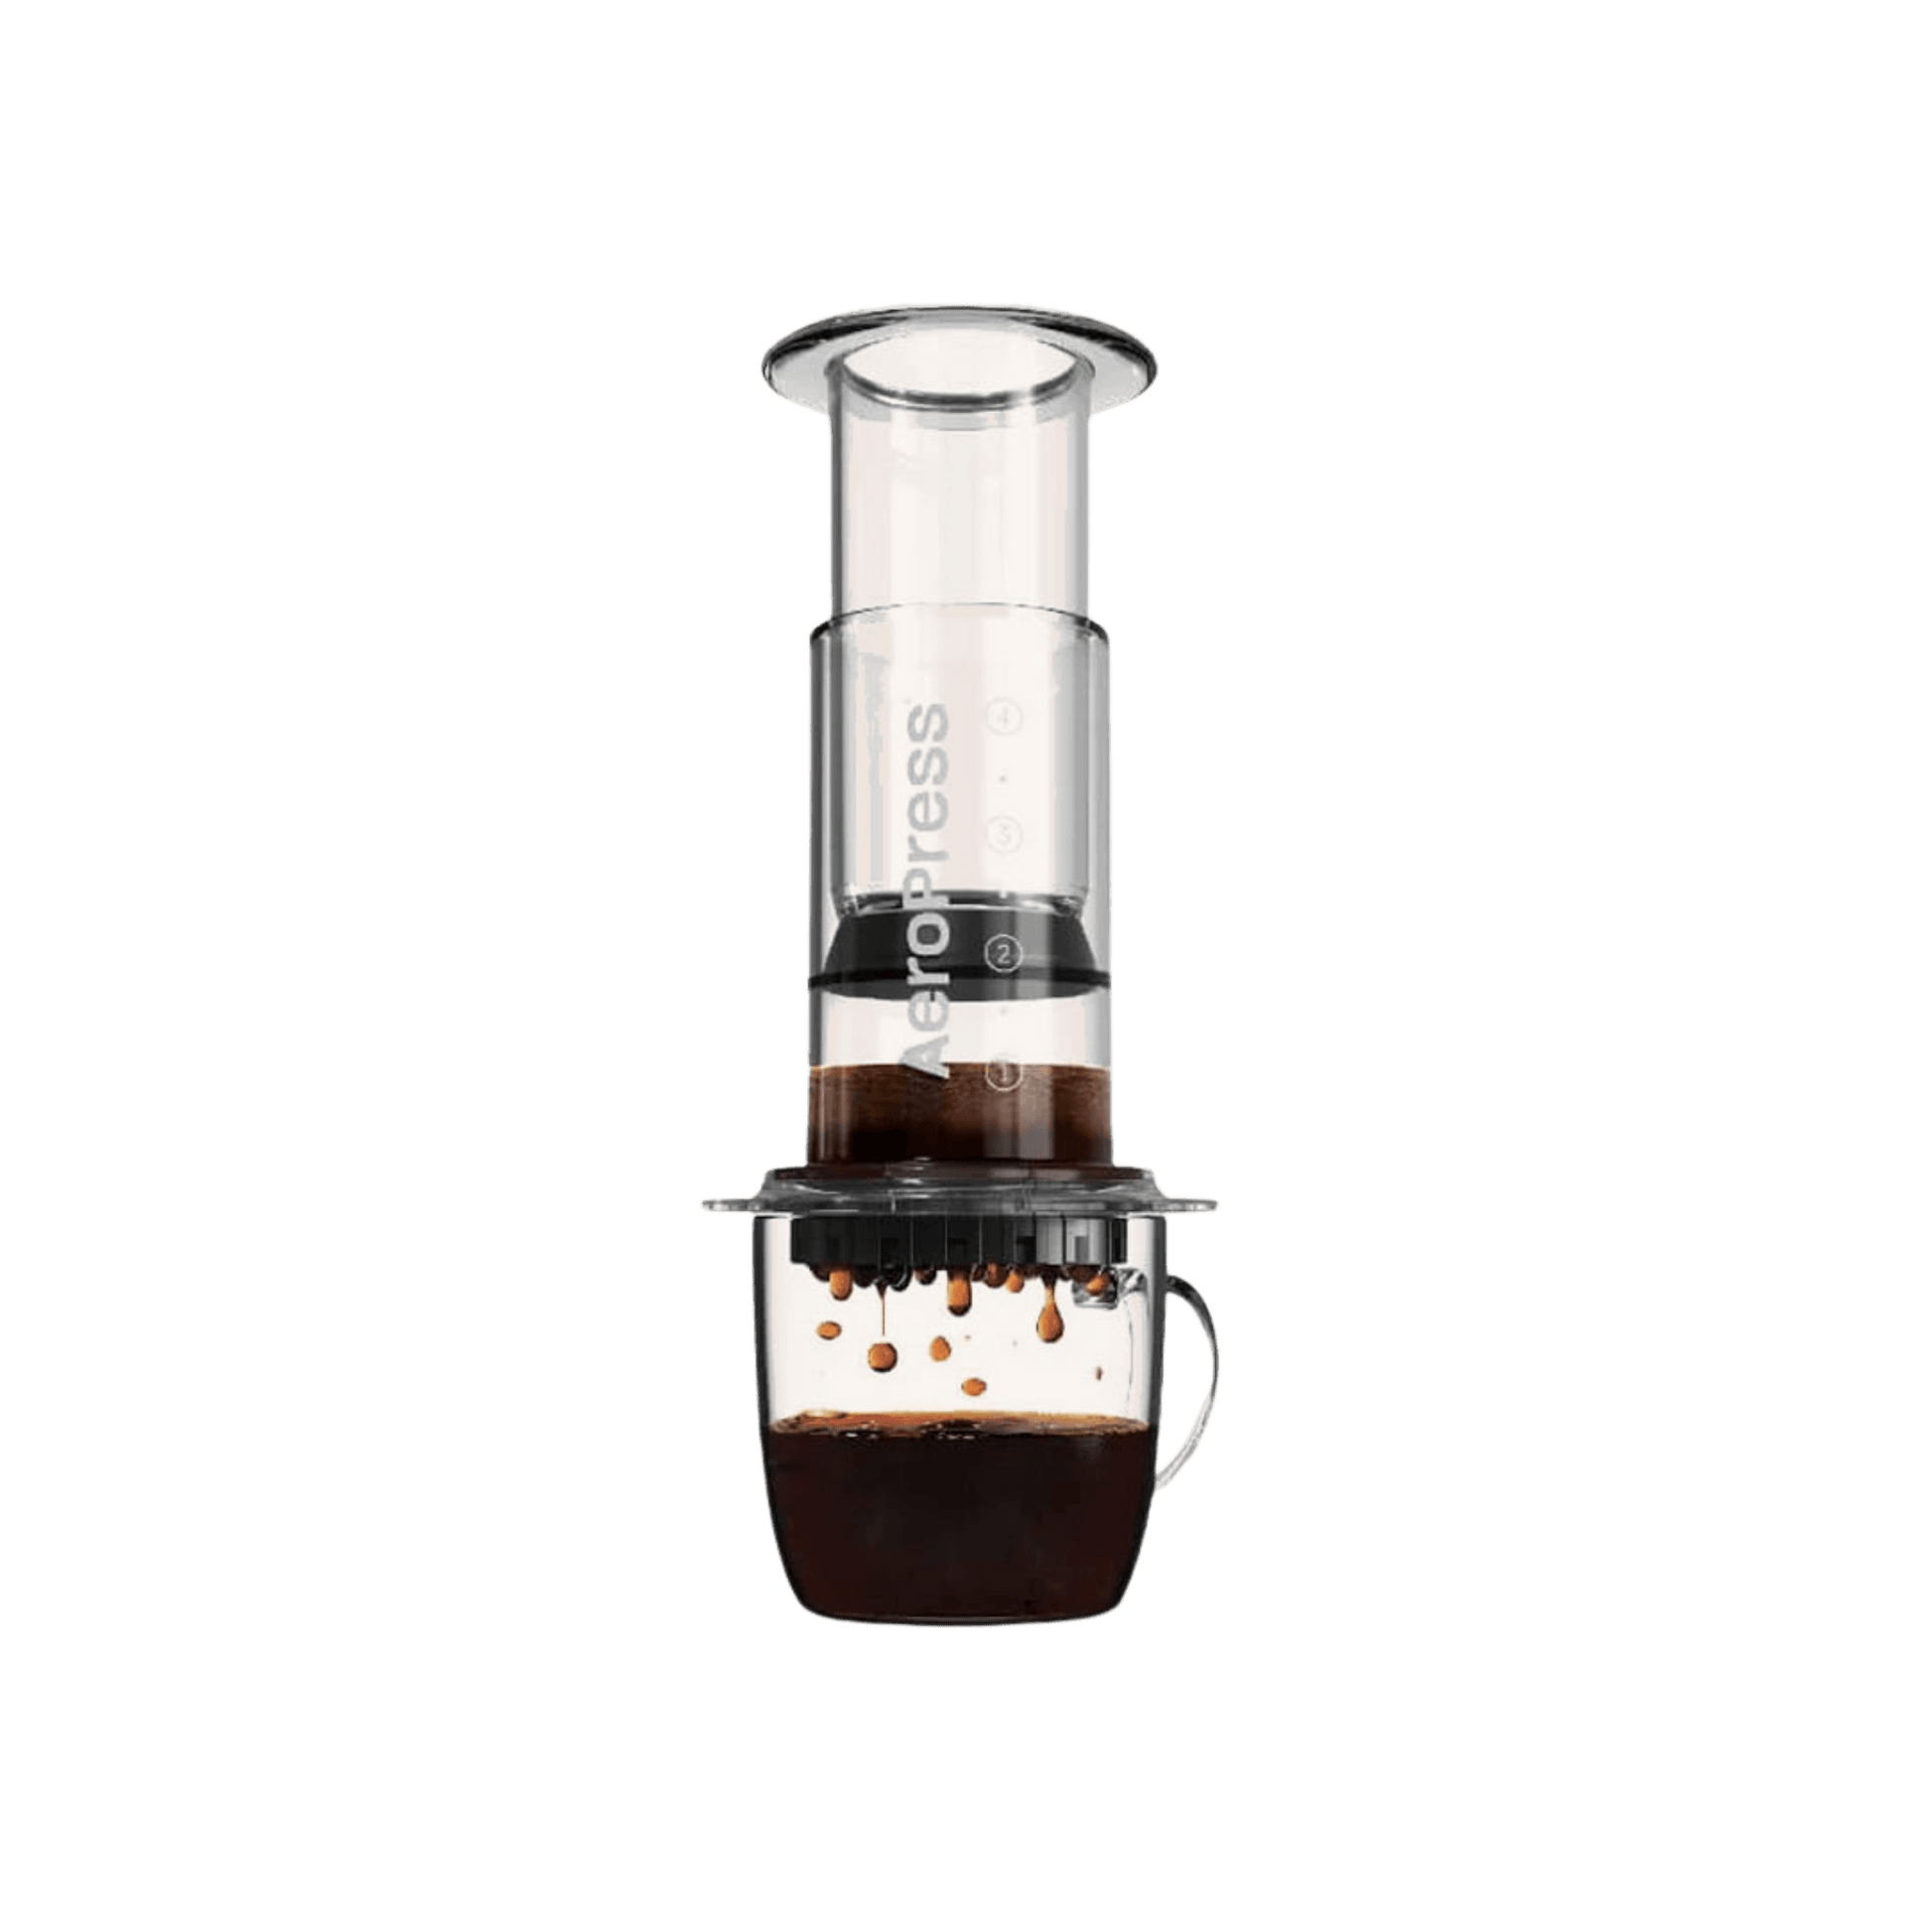 AeroPress Clear Coffee Maker and Coffee